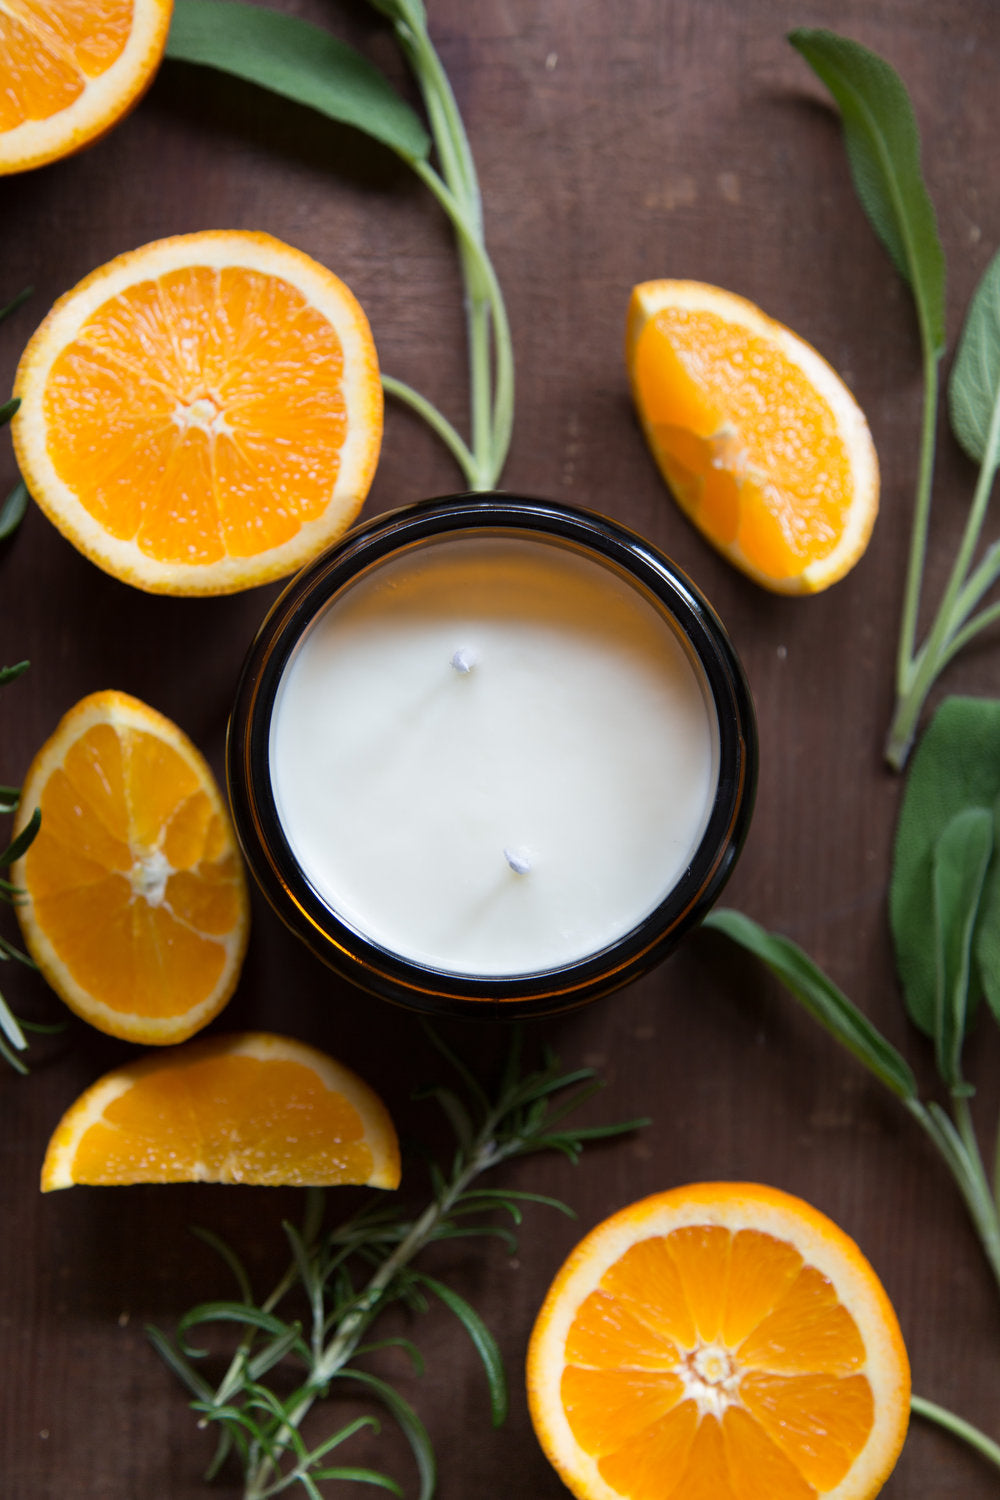 Italian Garden candle (Orange + Rosemary + Sage)